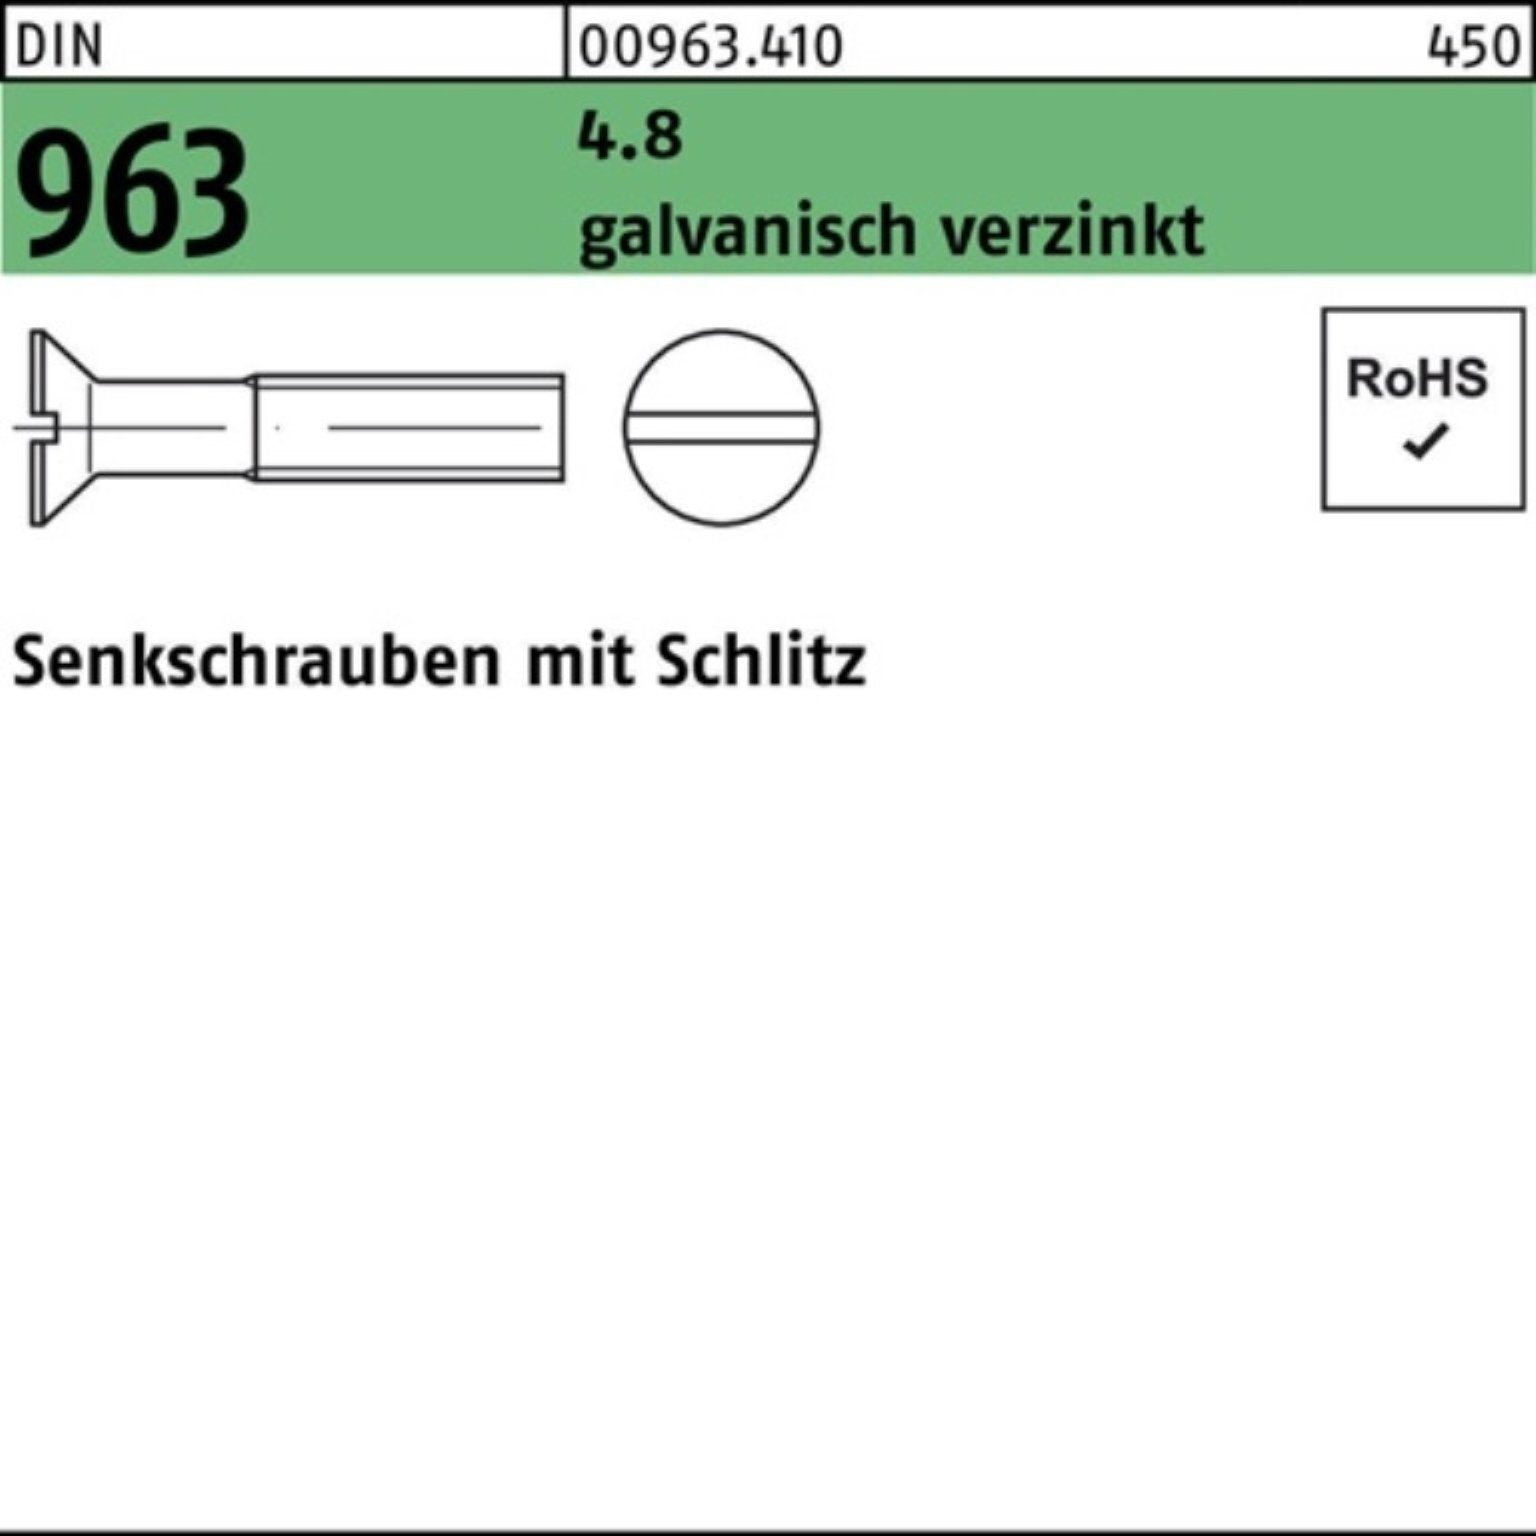 Reyher Senkschraube 100er Pack Senkschraube DIN 963 Schlitz M8x 25 4.8 galv.verz. 100 Stü